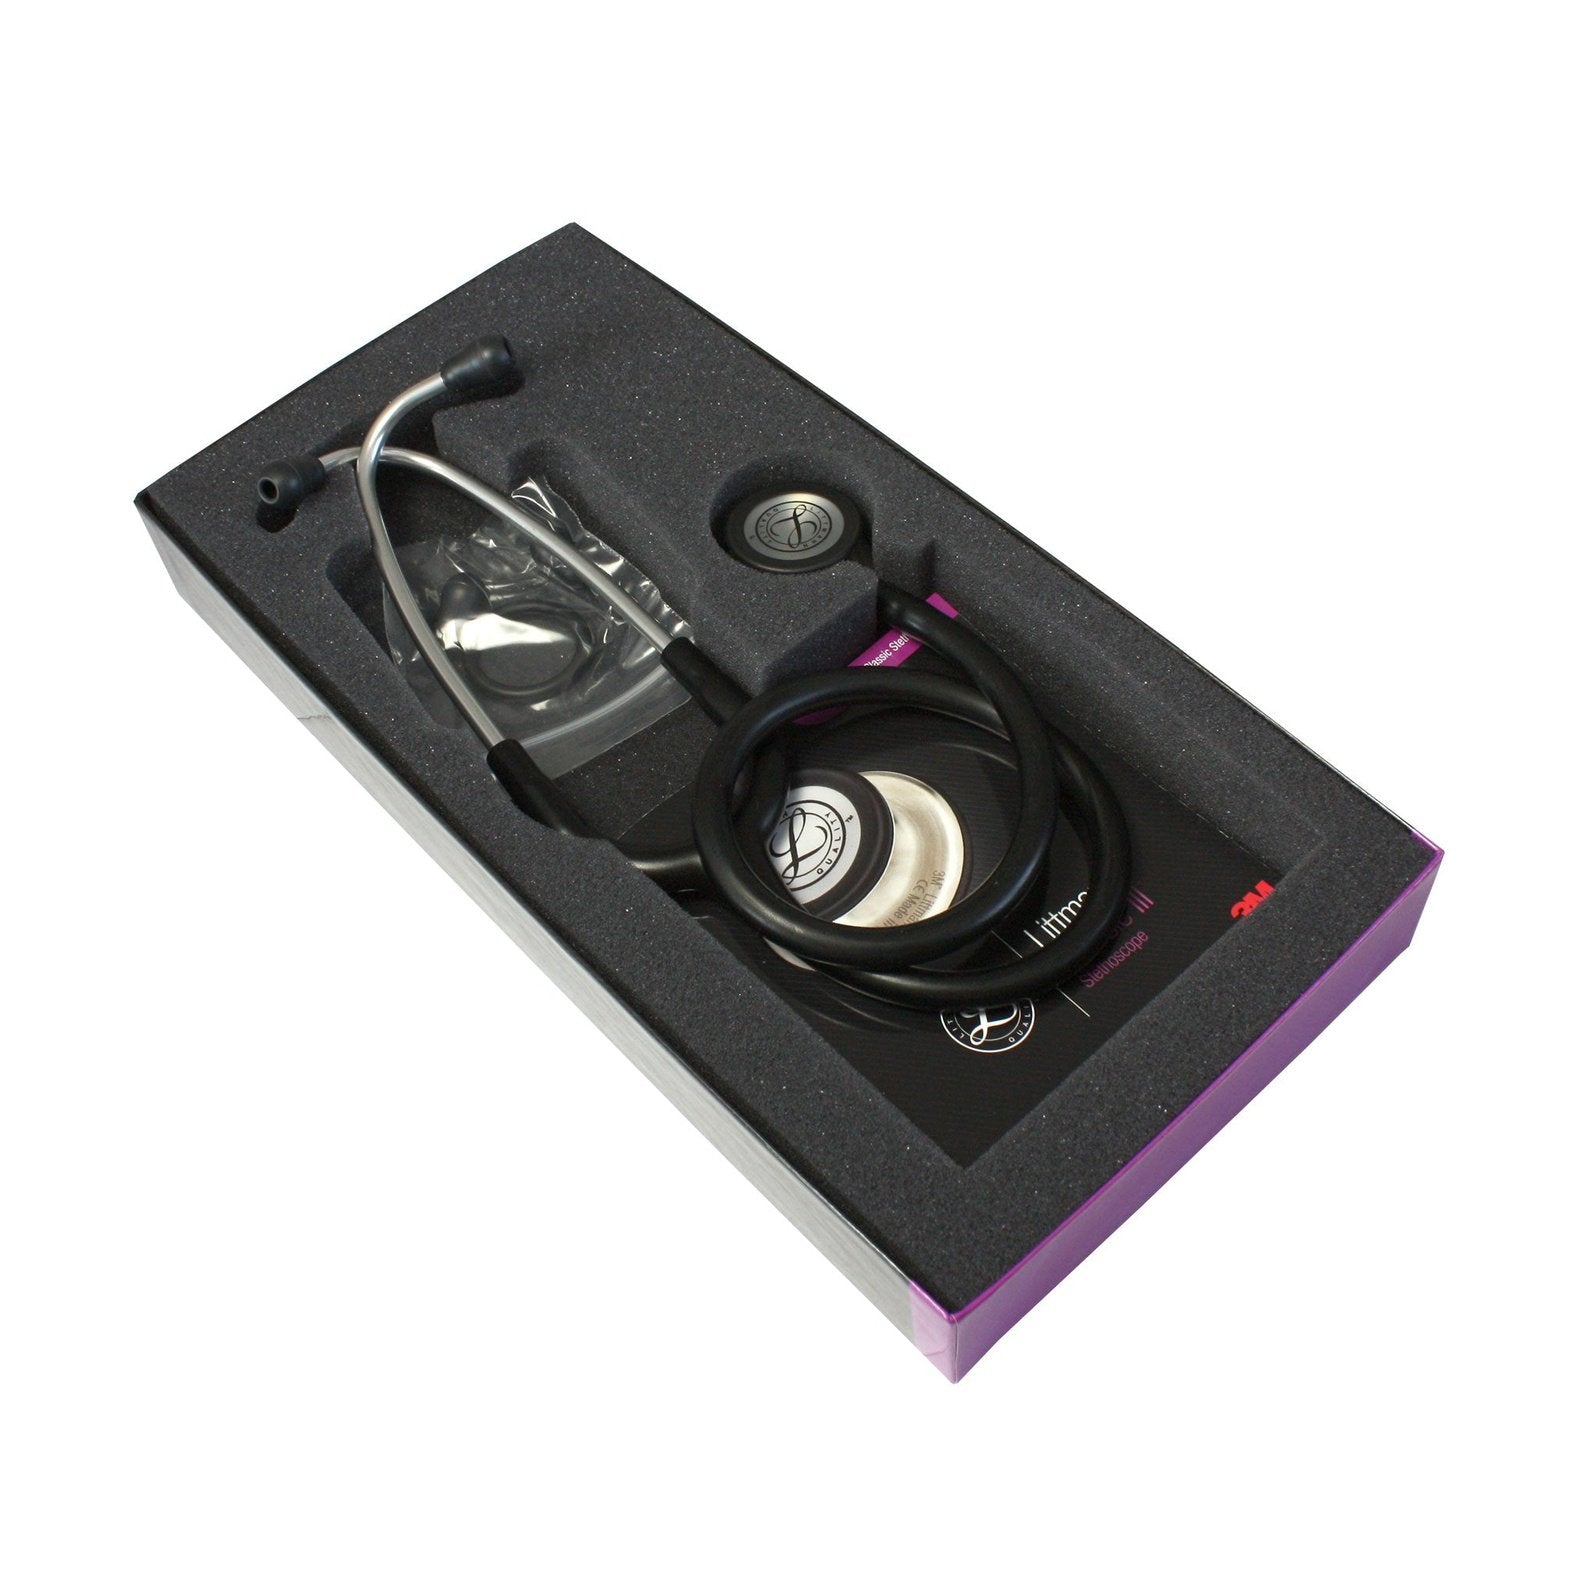 3M 5811 Littmann Classic III Smoke-Finish Monitoring Stethoscope with Black  Identification Tag, 27 Black Tube